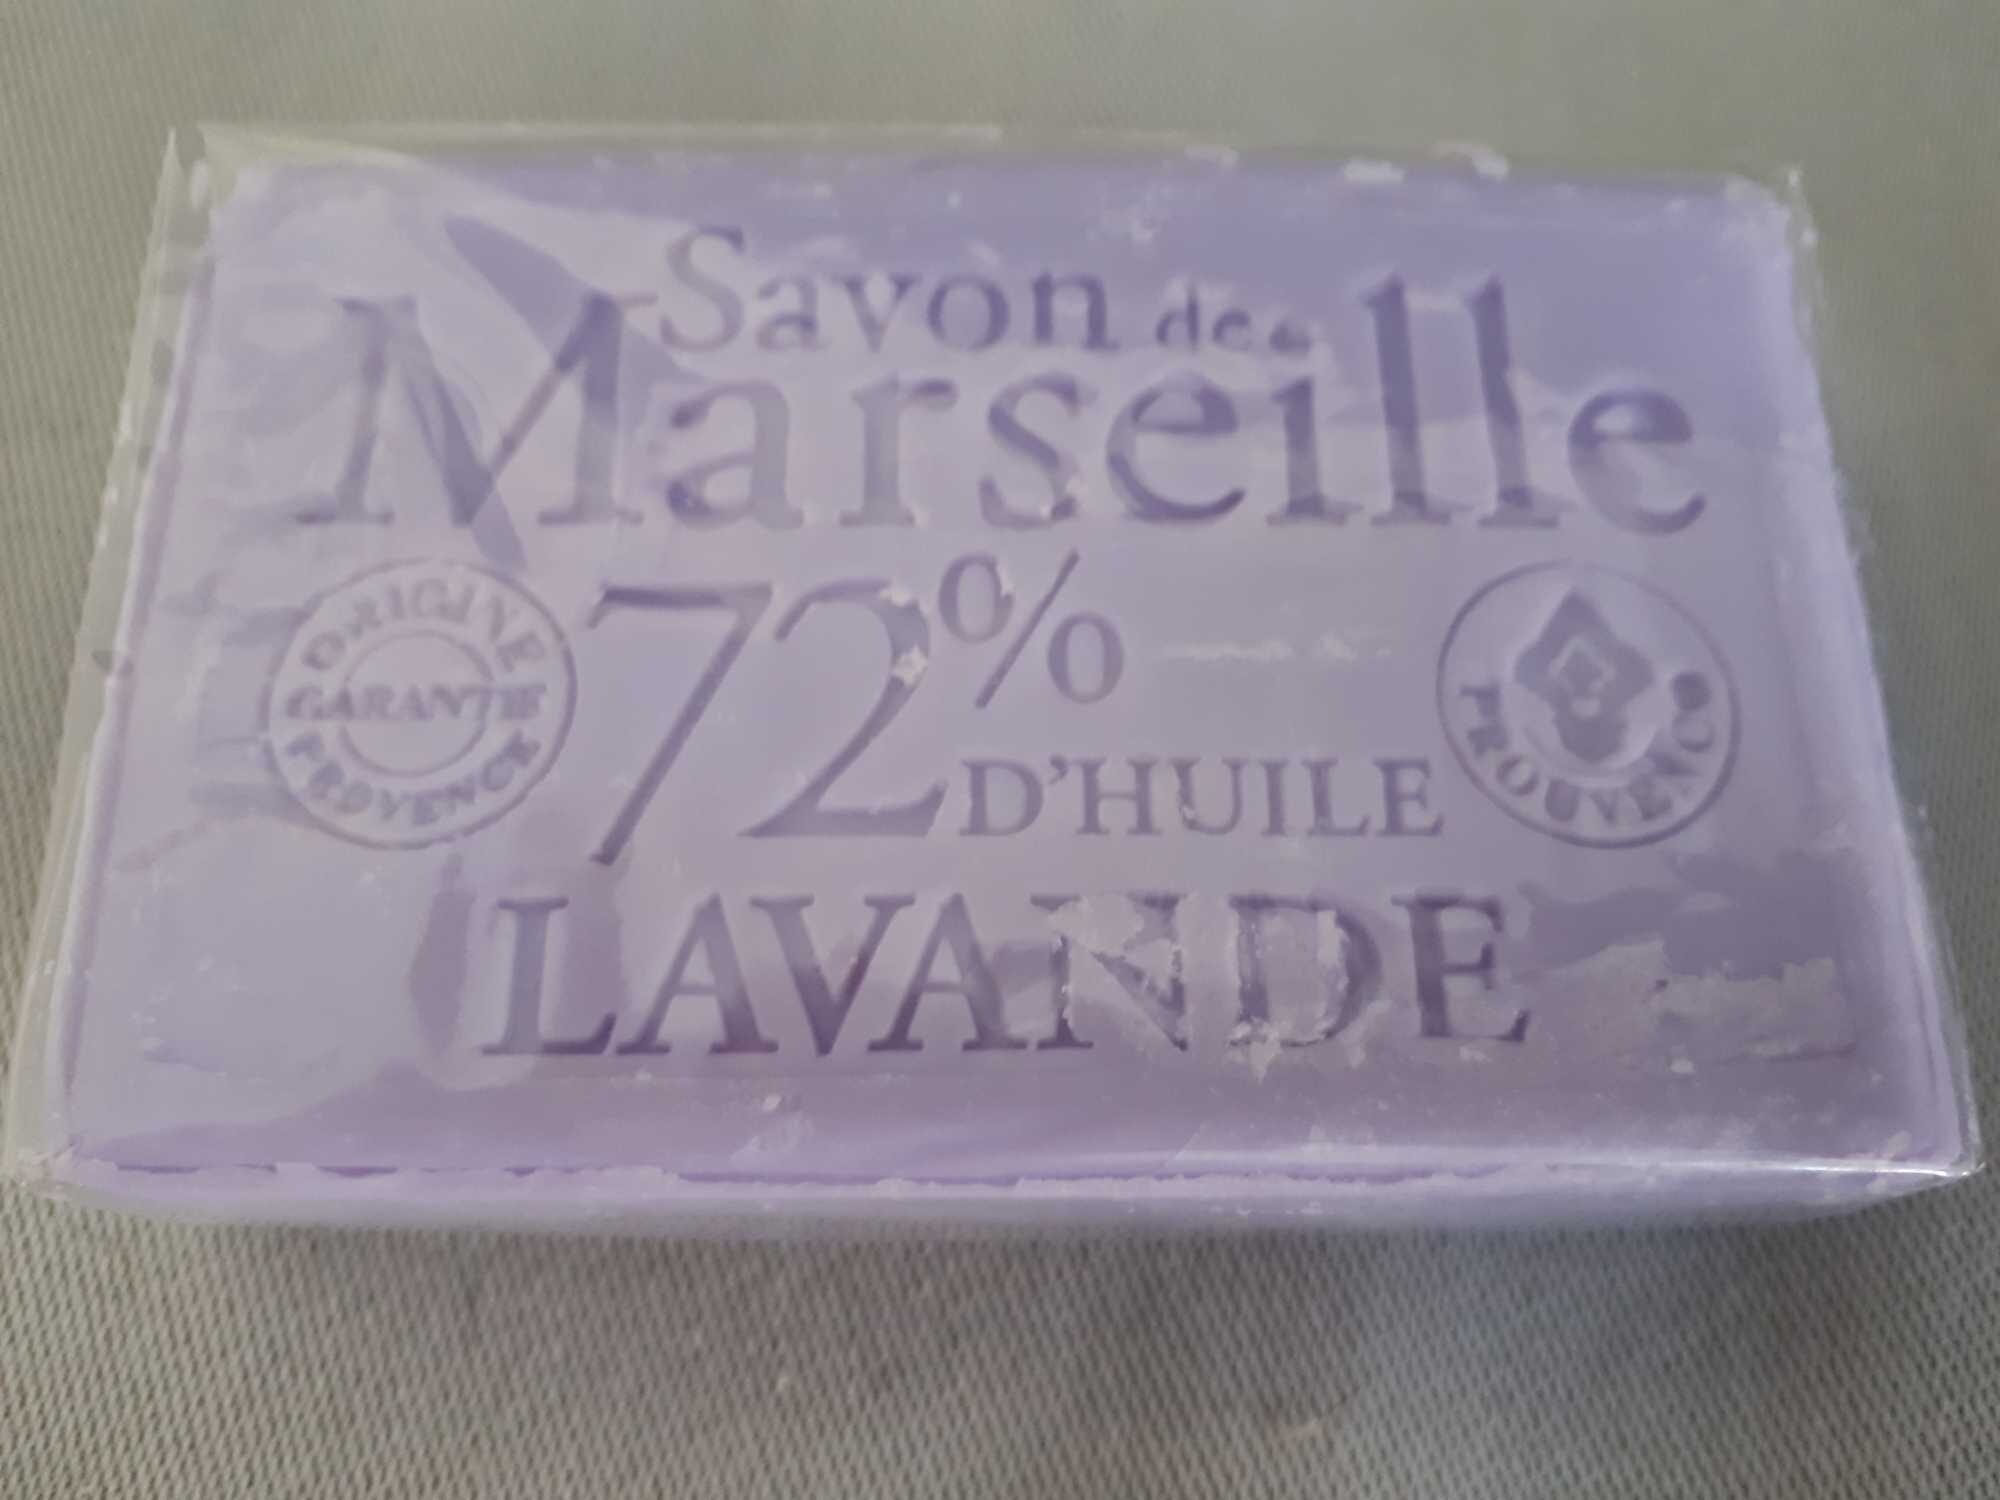 Savon Lavande 100g - Product - fr